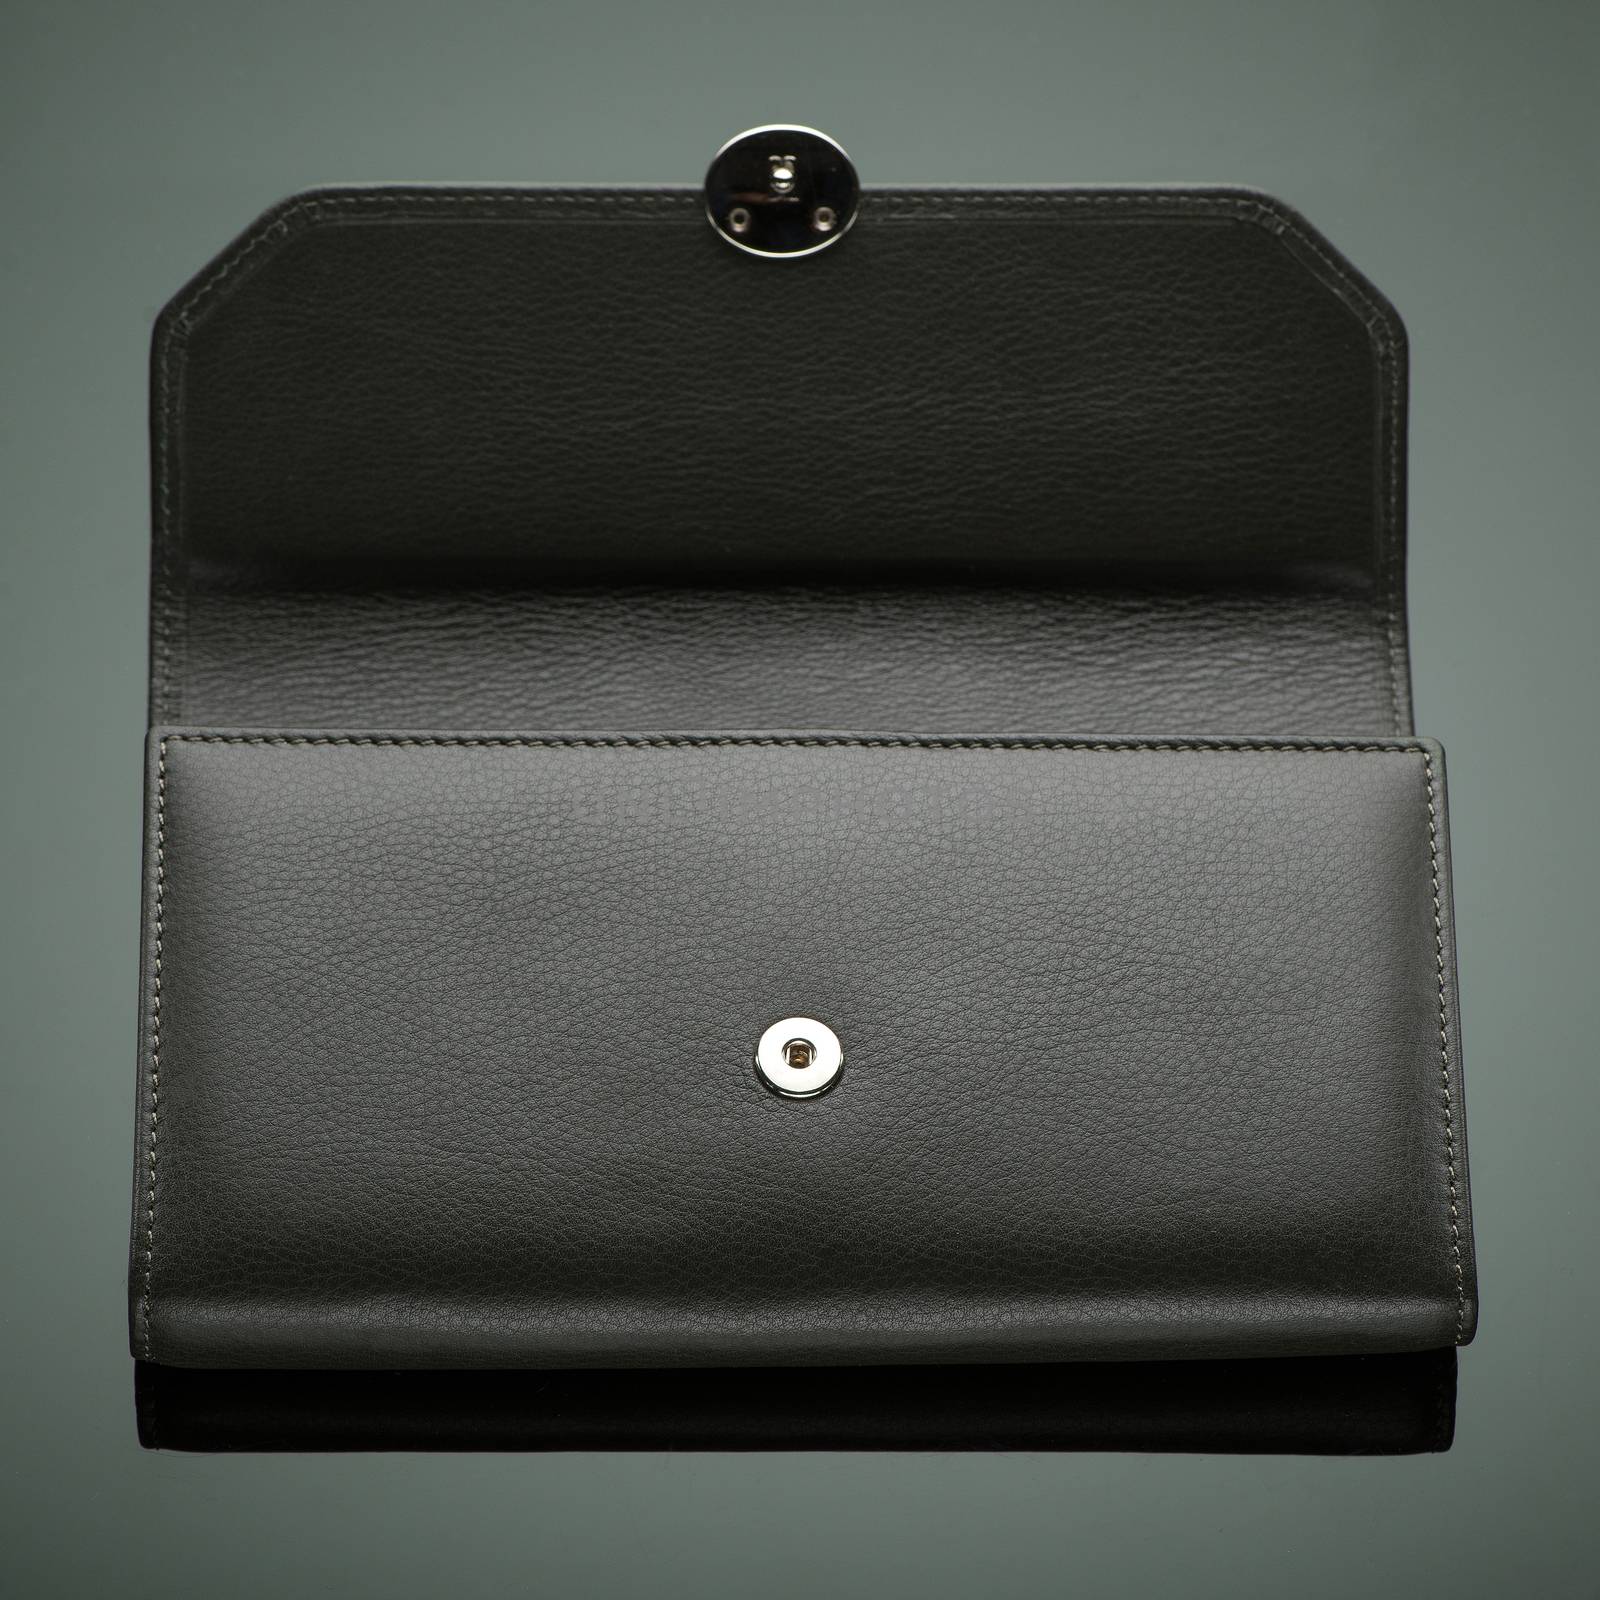 Fashionable designer wallet on a green background